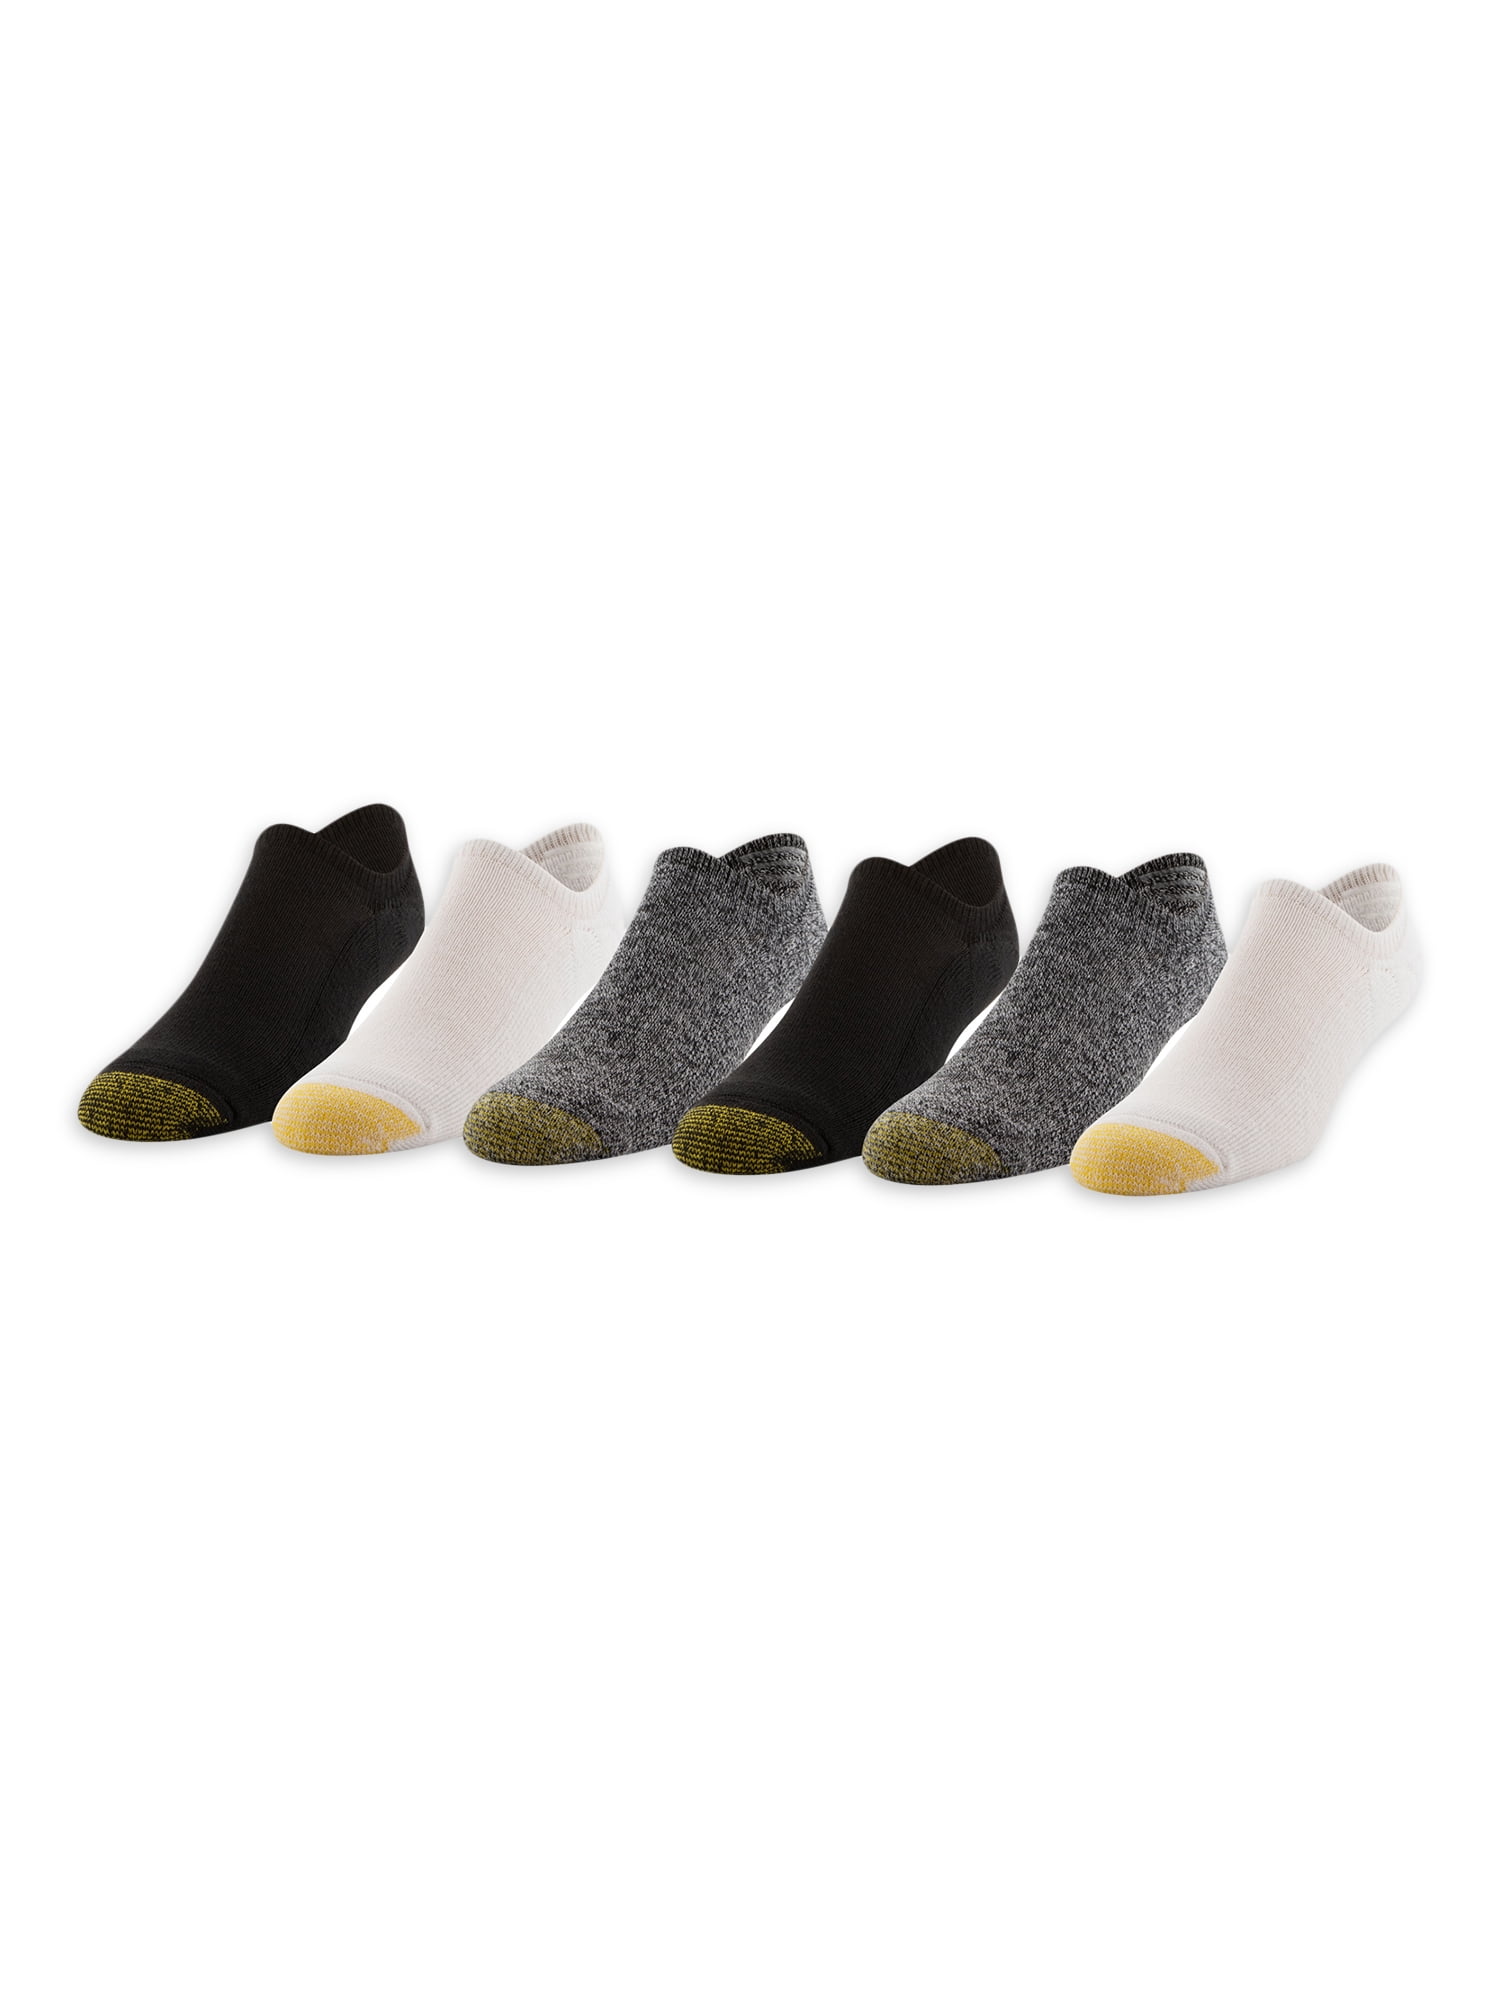 GOLDTOE Edition Men's Casual Sneaker Socks, 6-Pack - Walmart.com